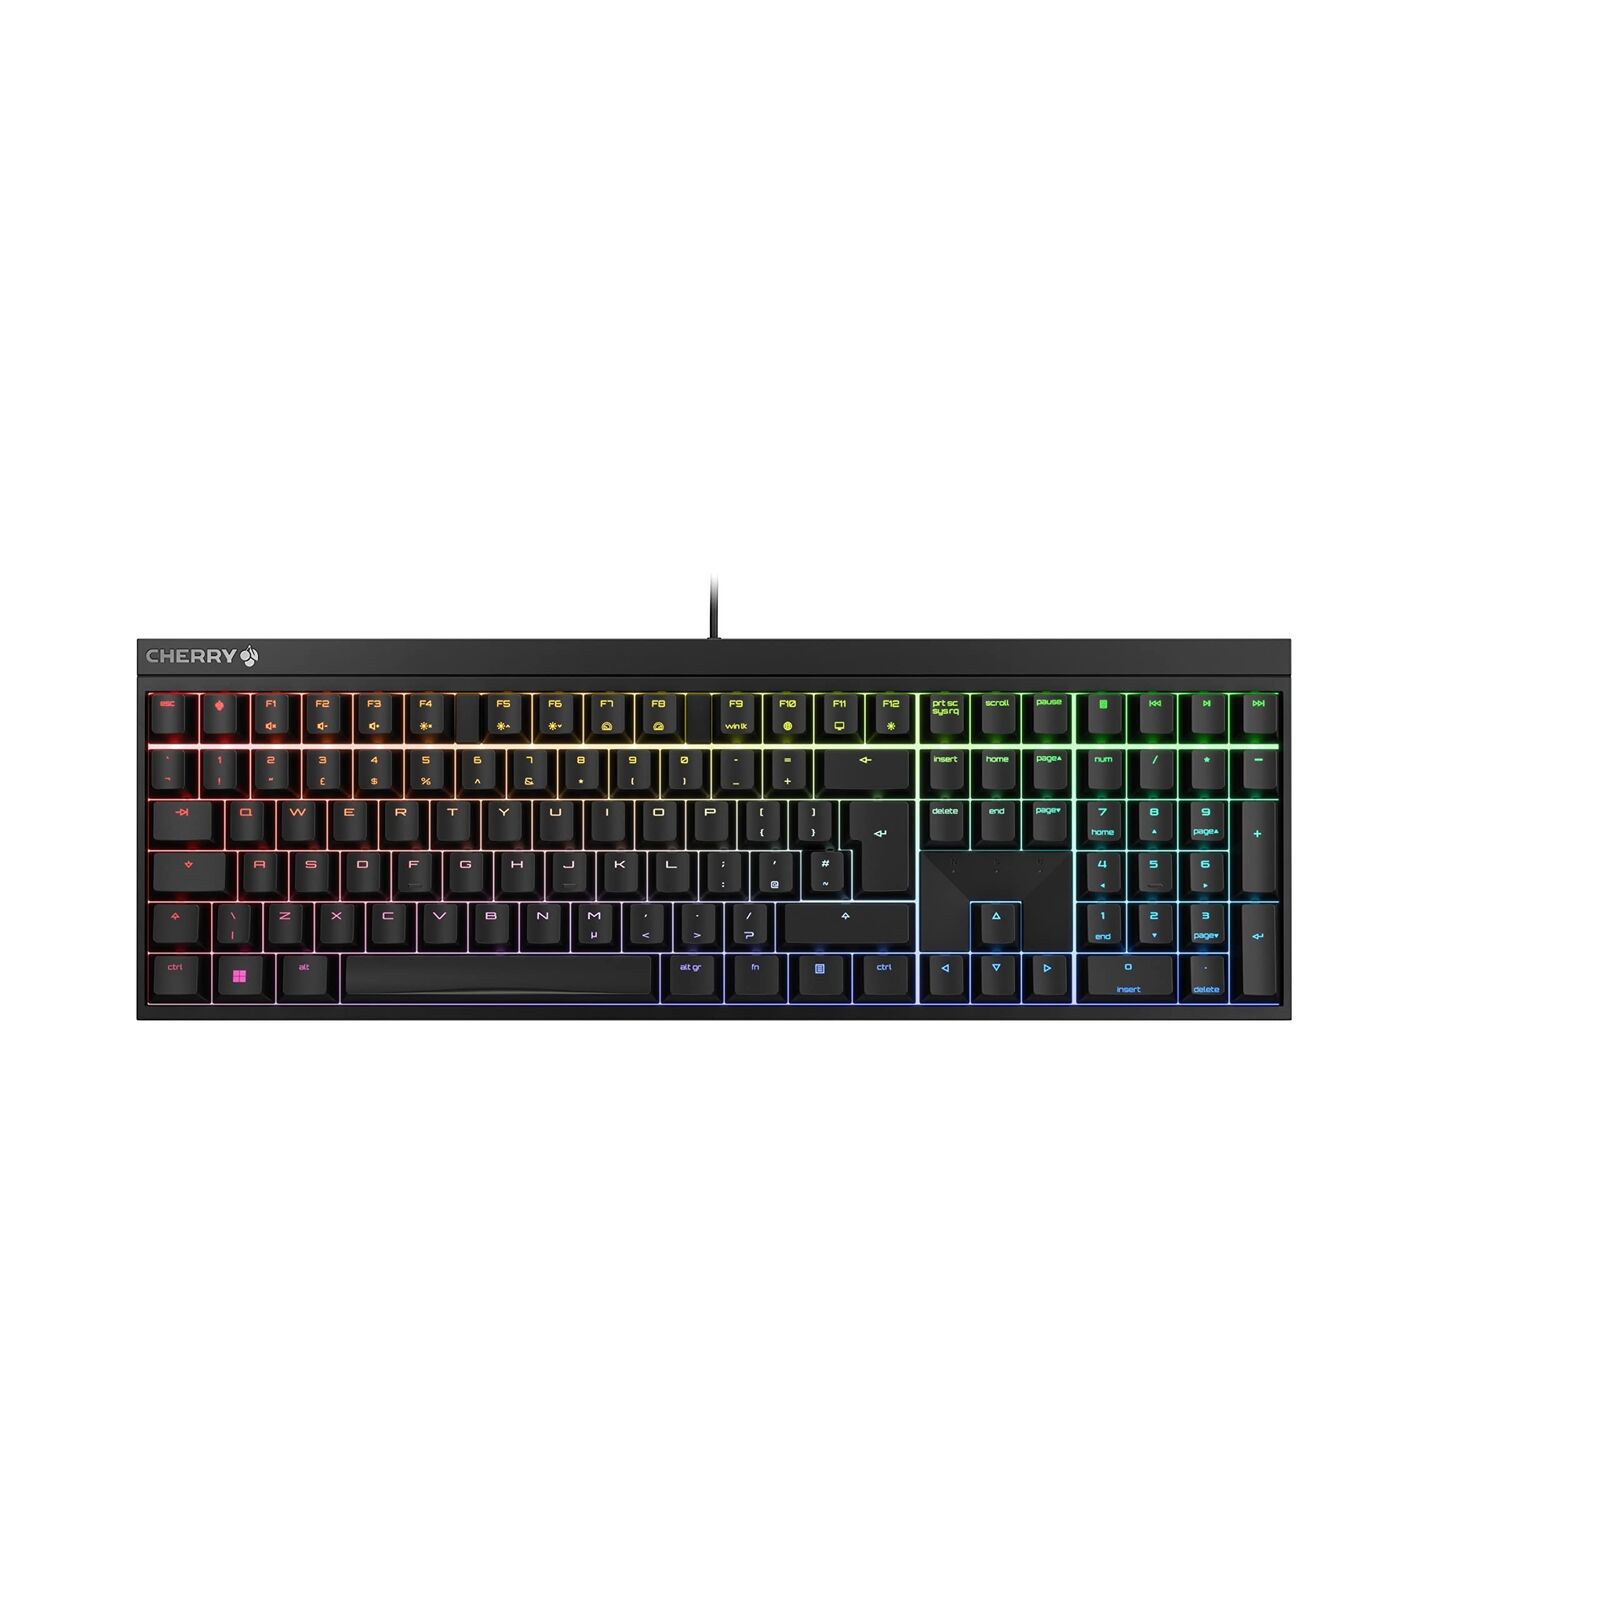 CHERRY MX 2.0S, Mechanical Gaming Keyboard with RGB Illumination, British Layout